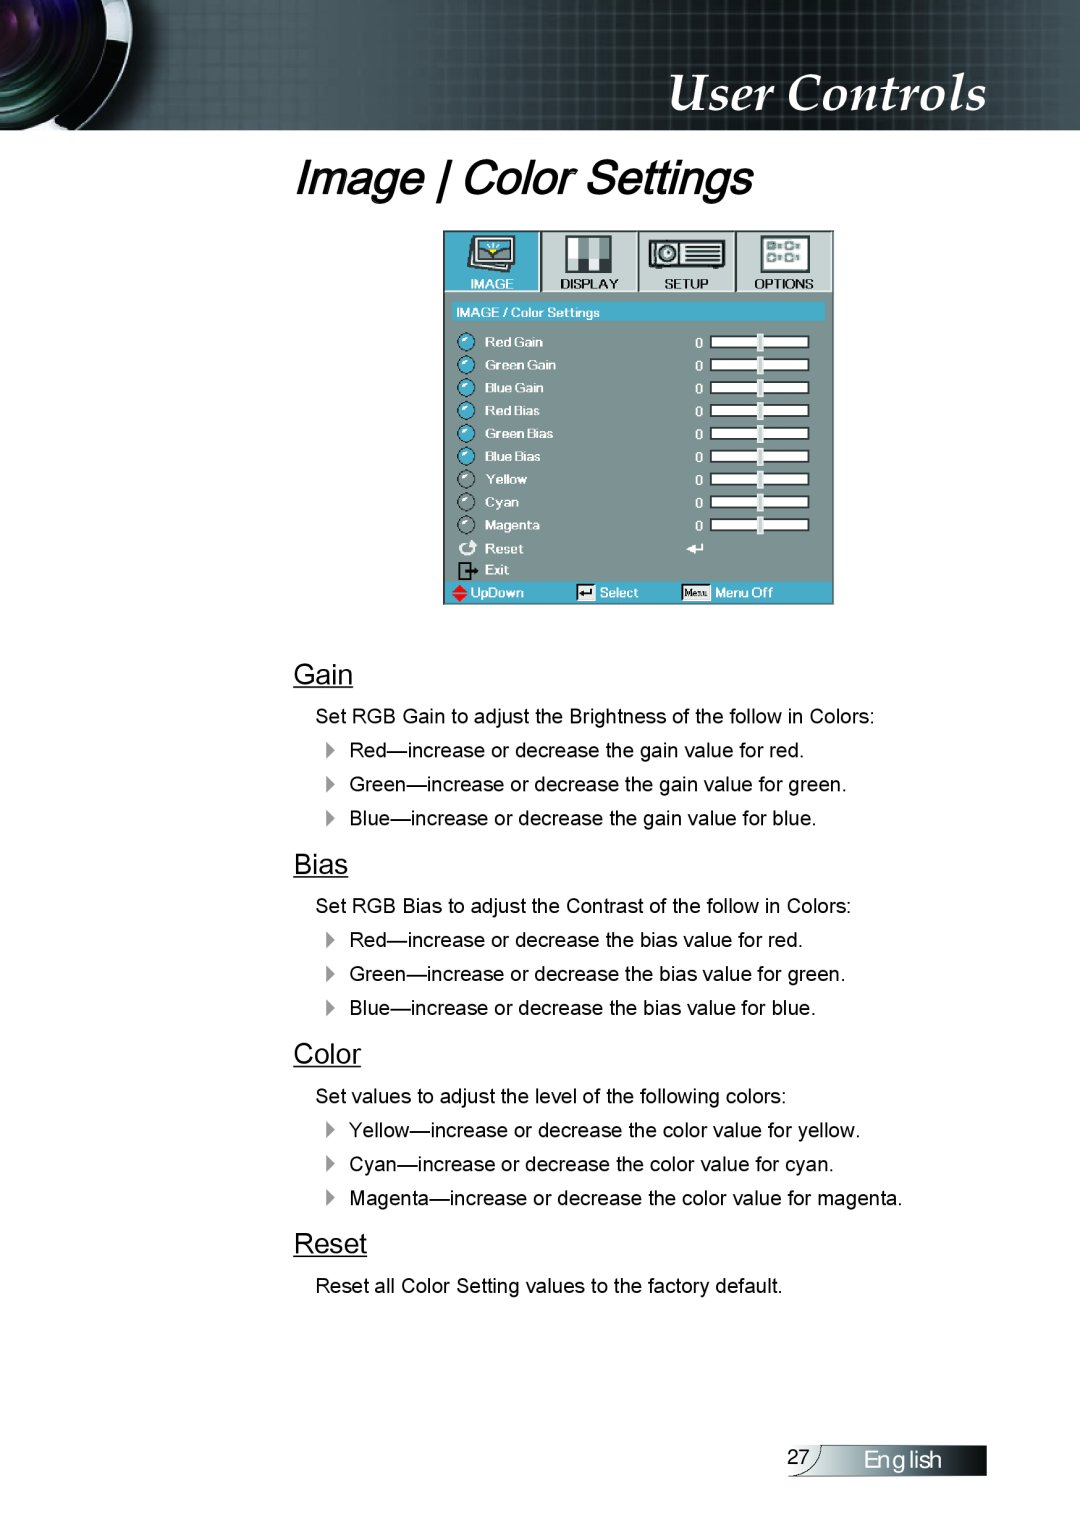 Optoma Technology TX779P3D manual Image Color Settings, Gain, Bias, Reset, User Controls, English 